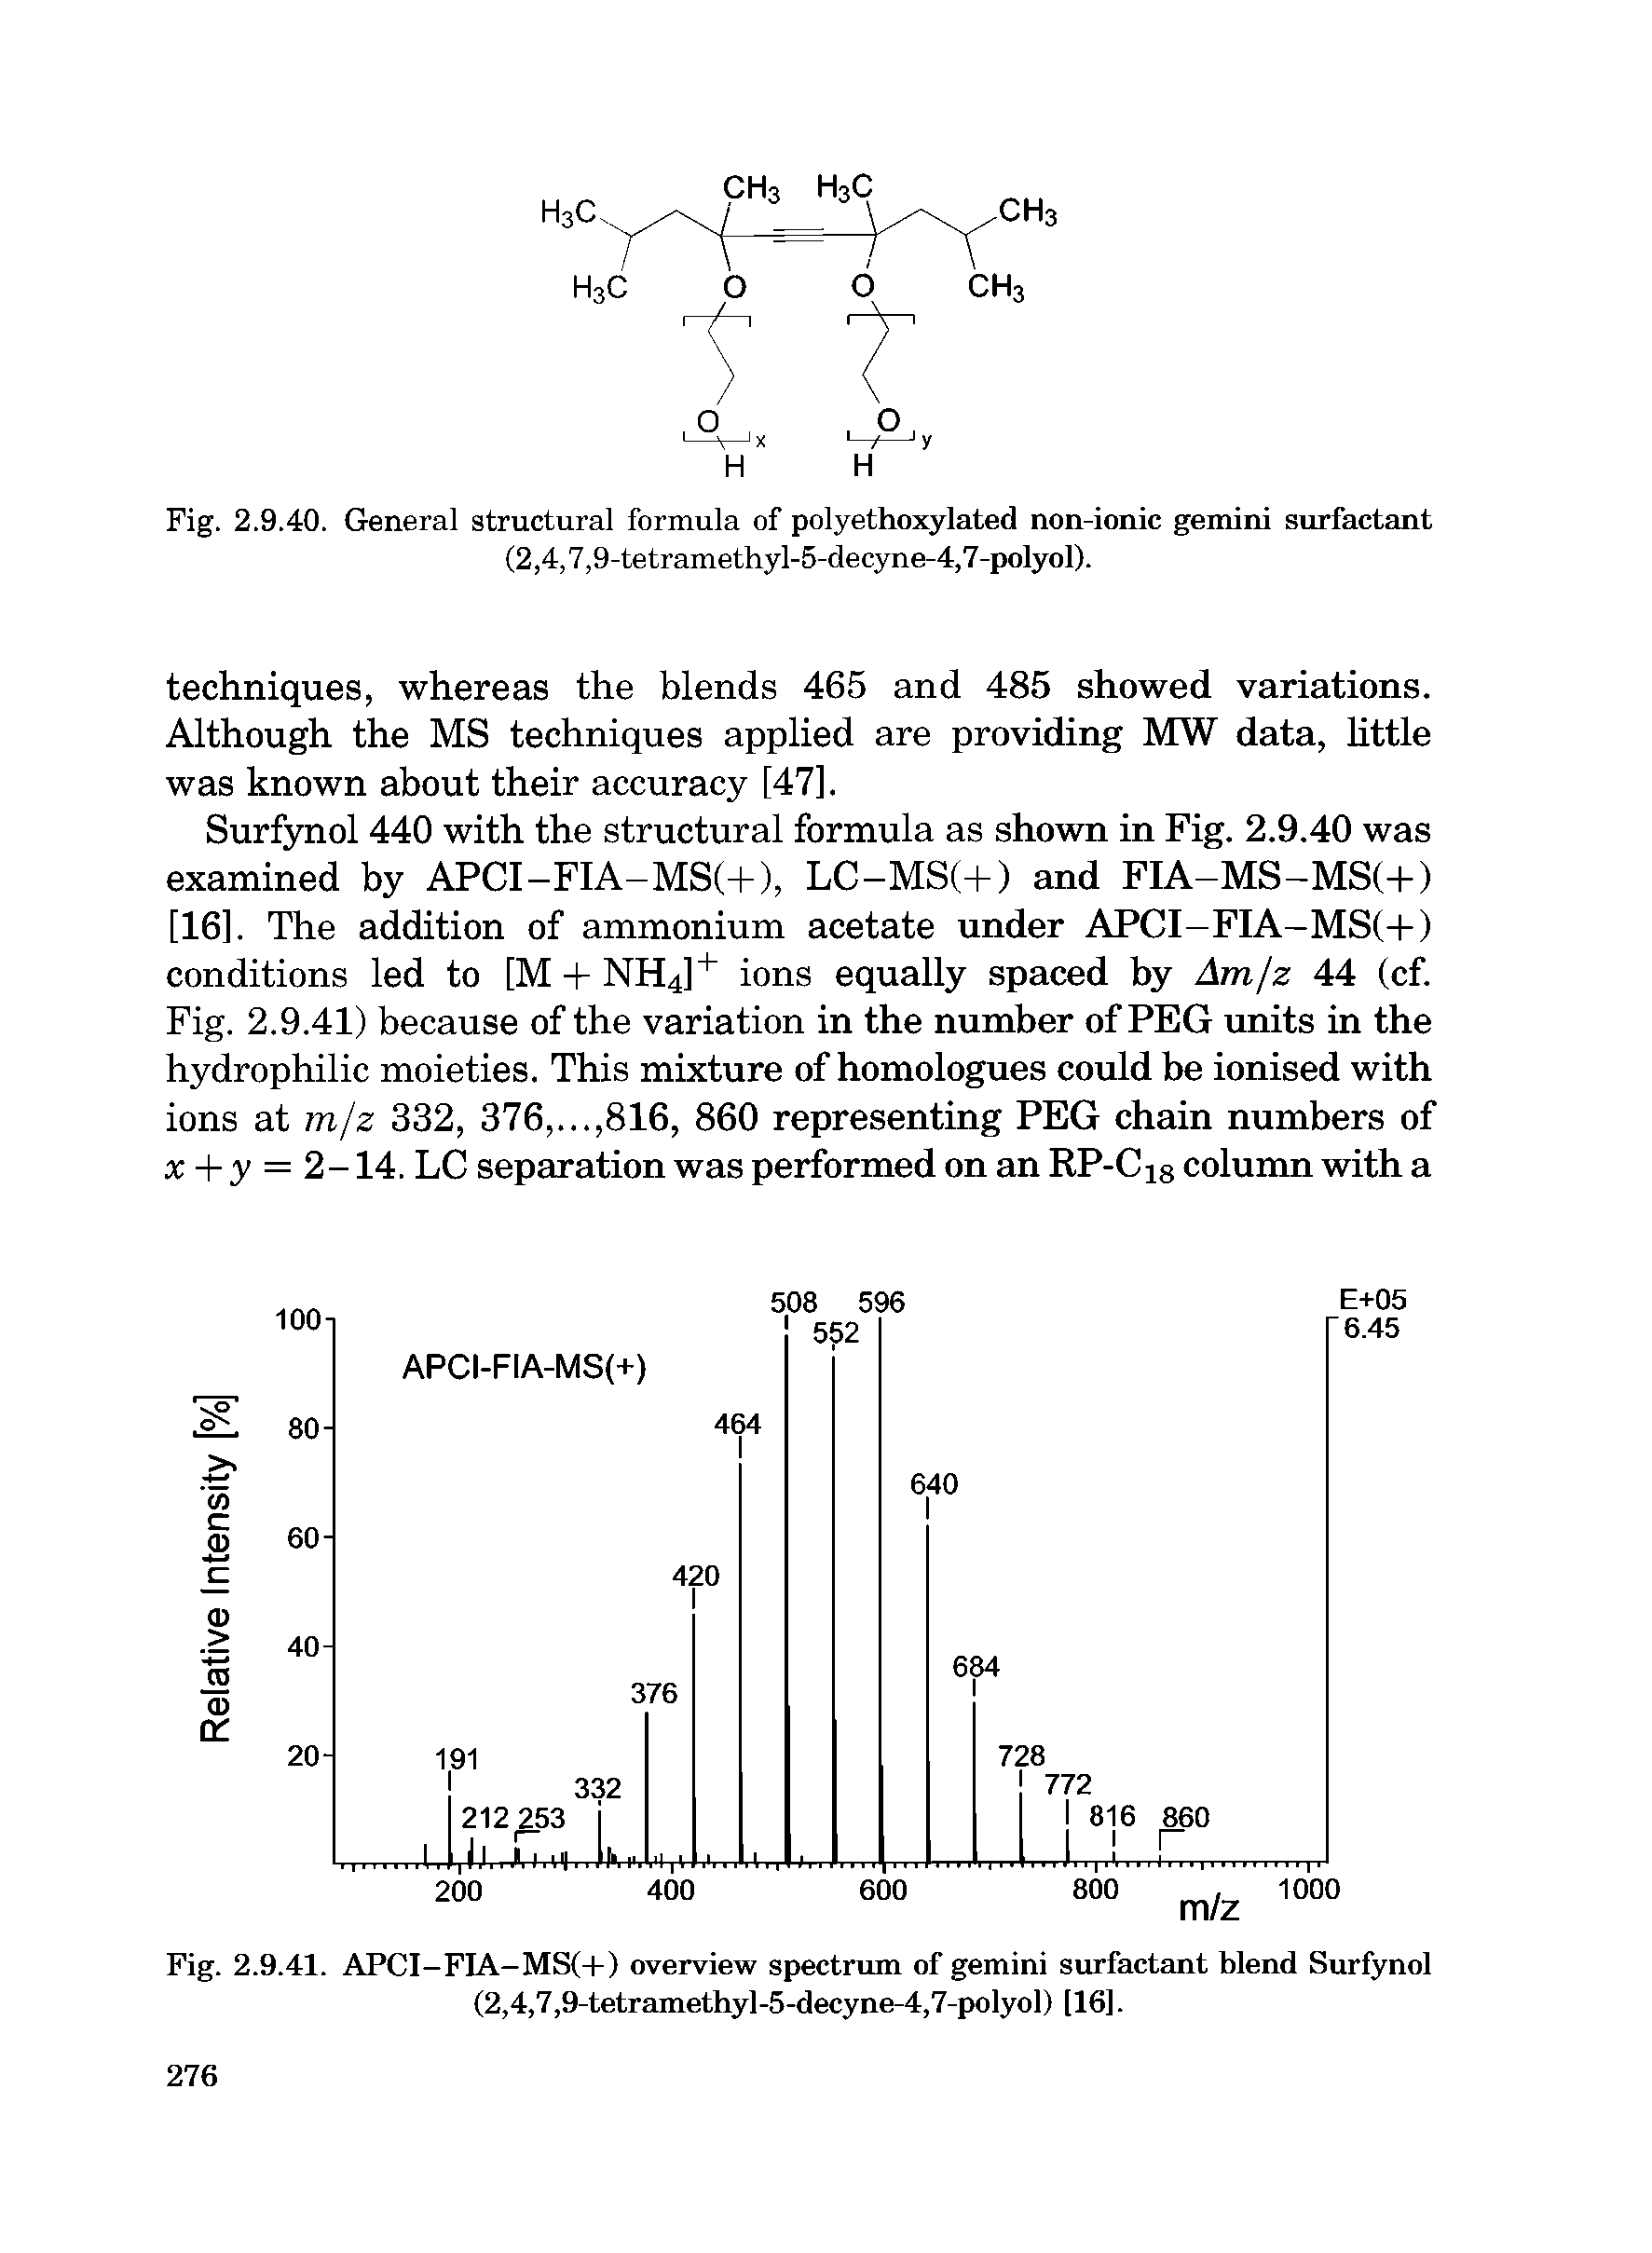 Fig. 2.9.41. APCI-FIA-MS(+) overview spectrum of gemini surfactant blend Surfynol (2,4,7,9-tetramethy]-5-decyne-4,7-polyol) [16].